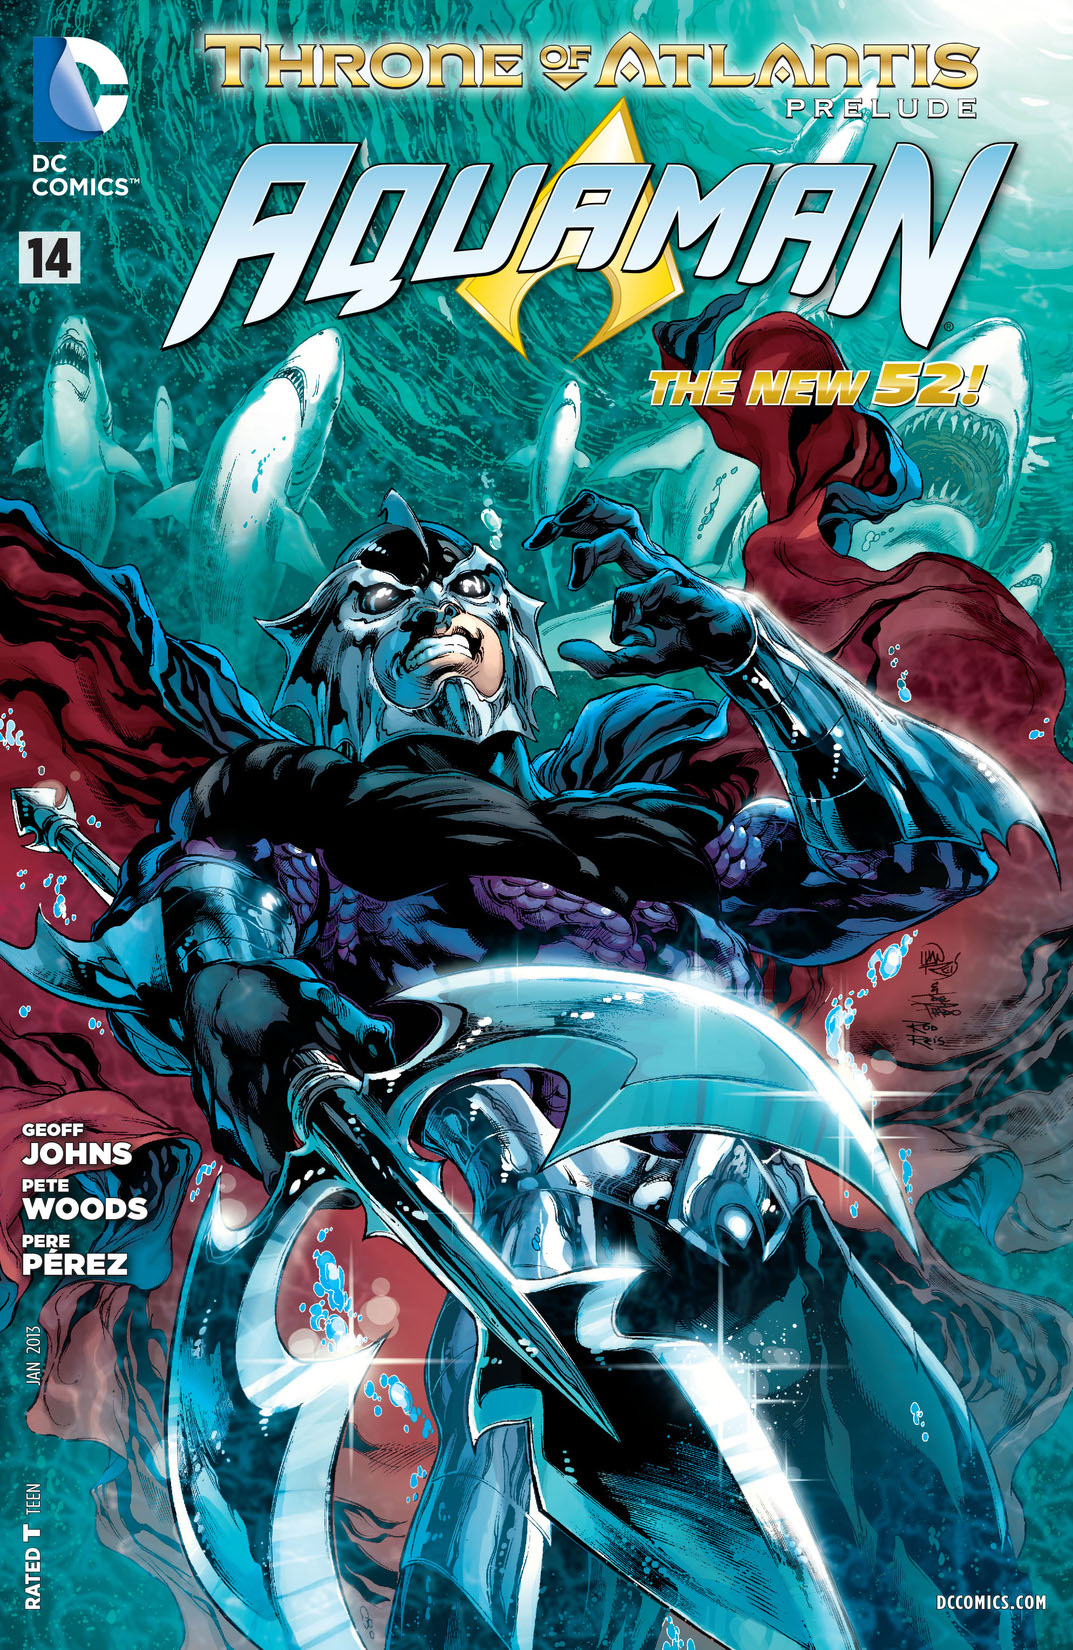 Aquaman (2011-) #14 preview images